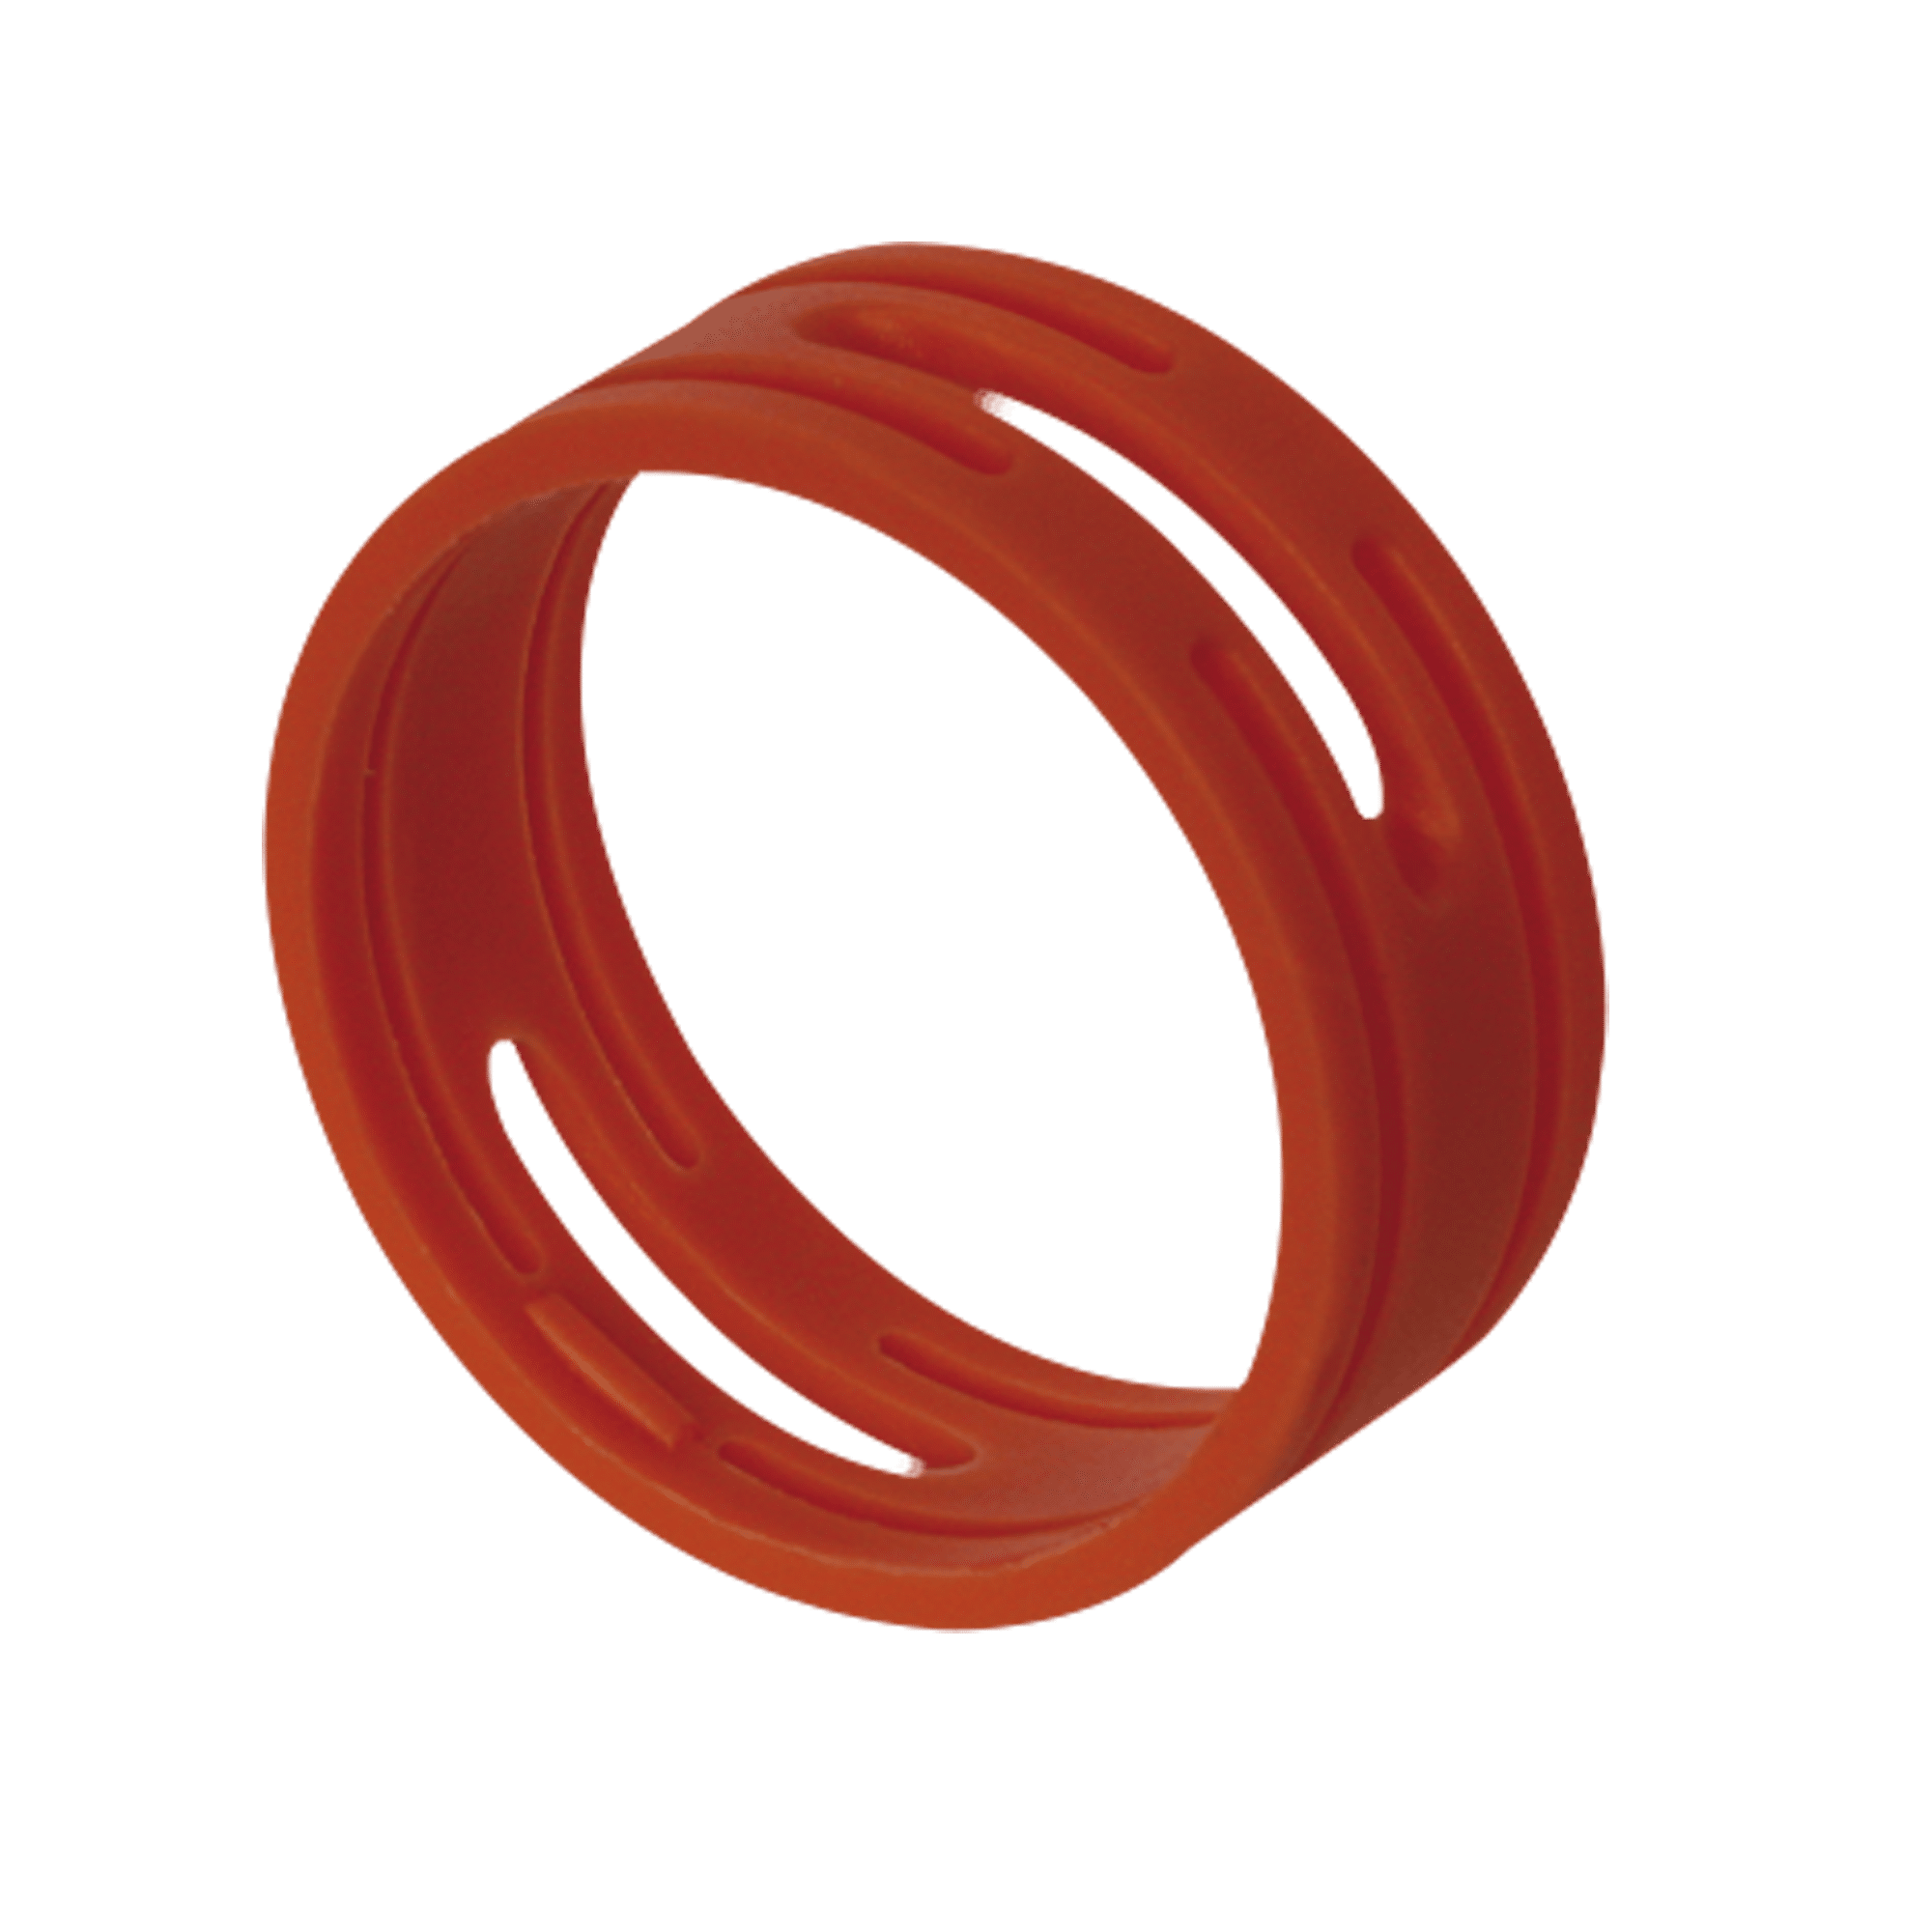 XX-Series coloured Ring - Onlinediscowinkel.nl